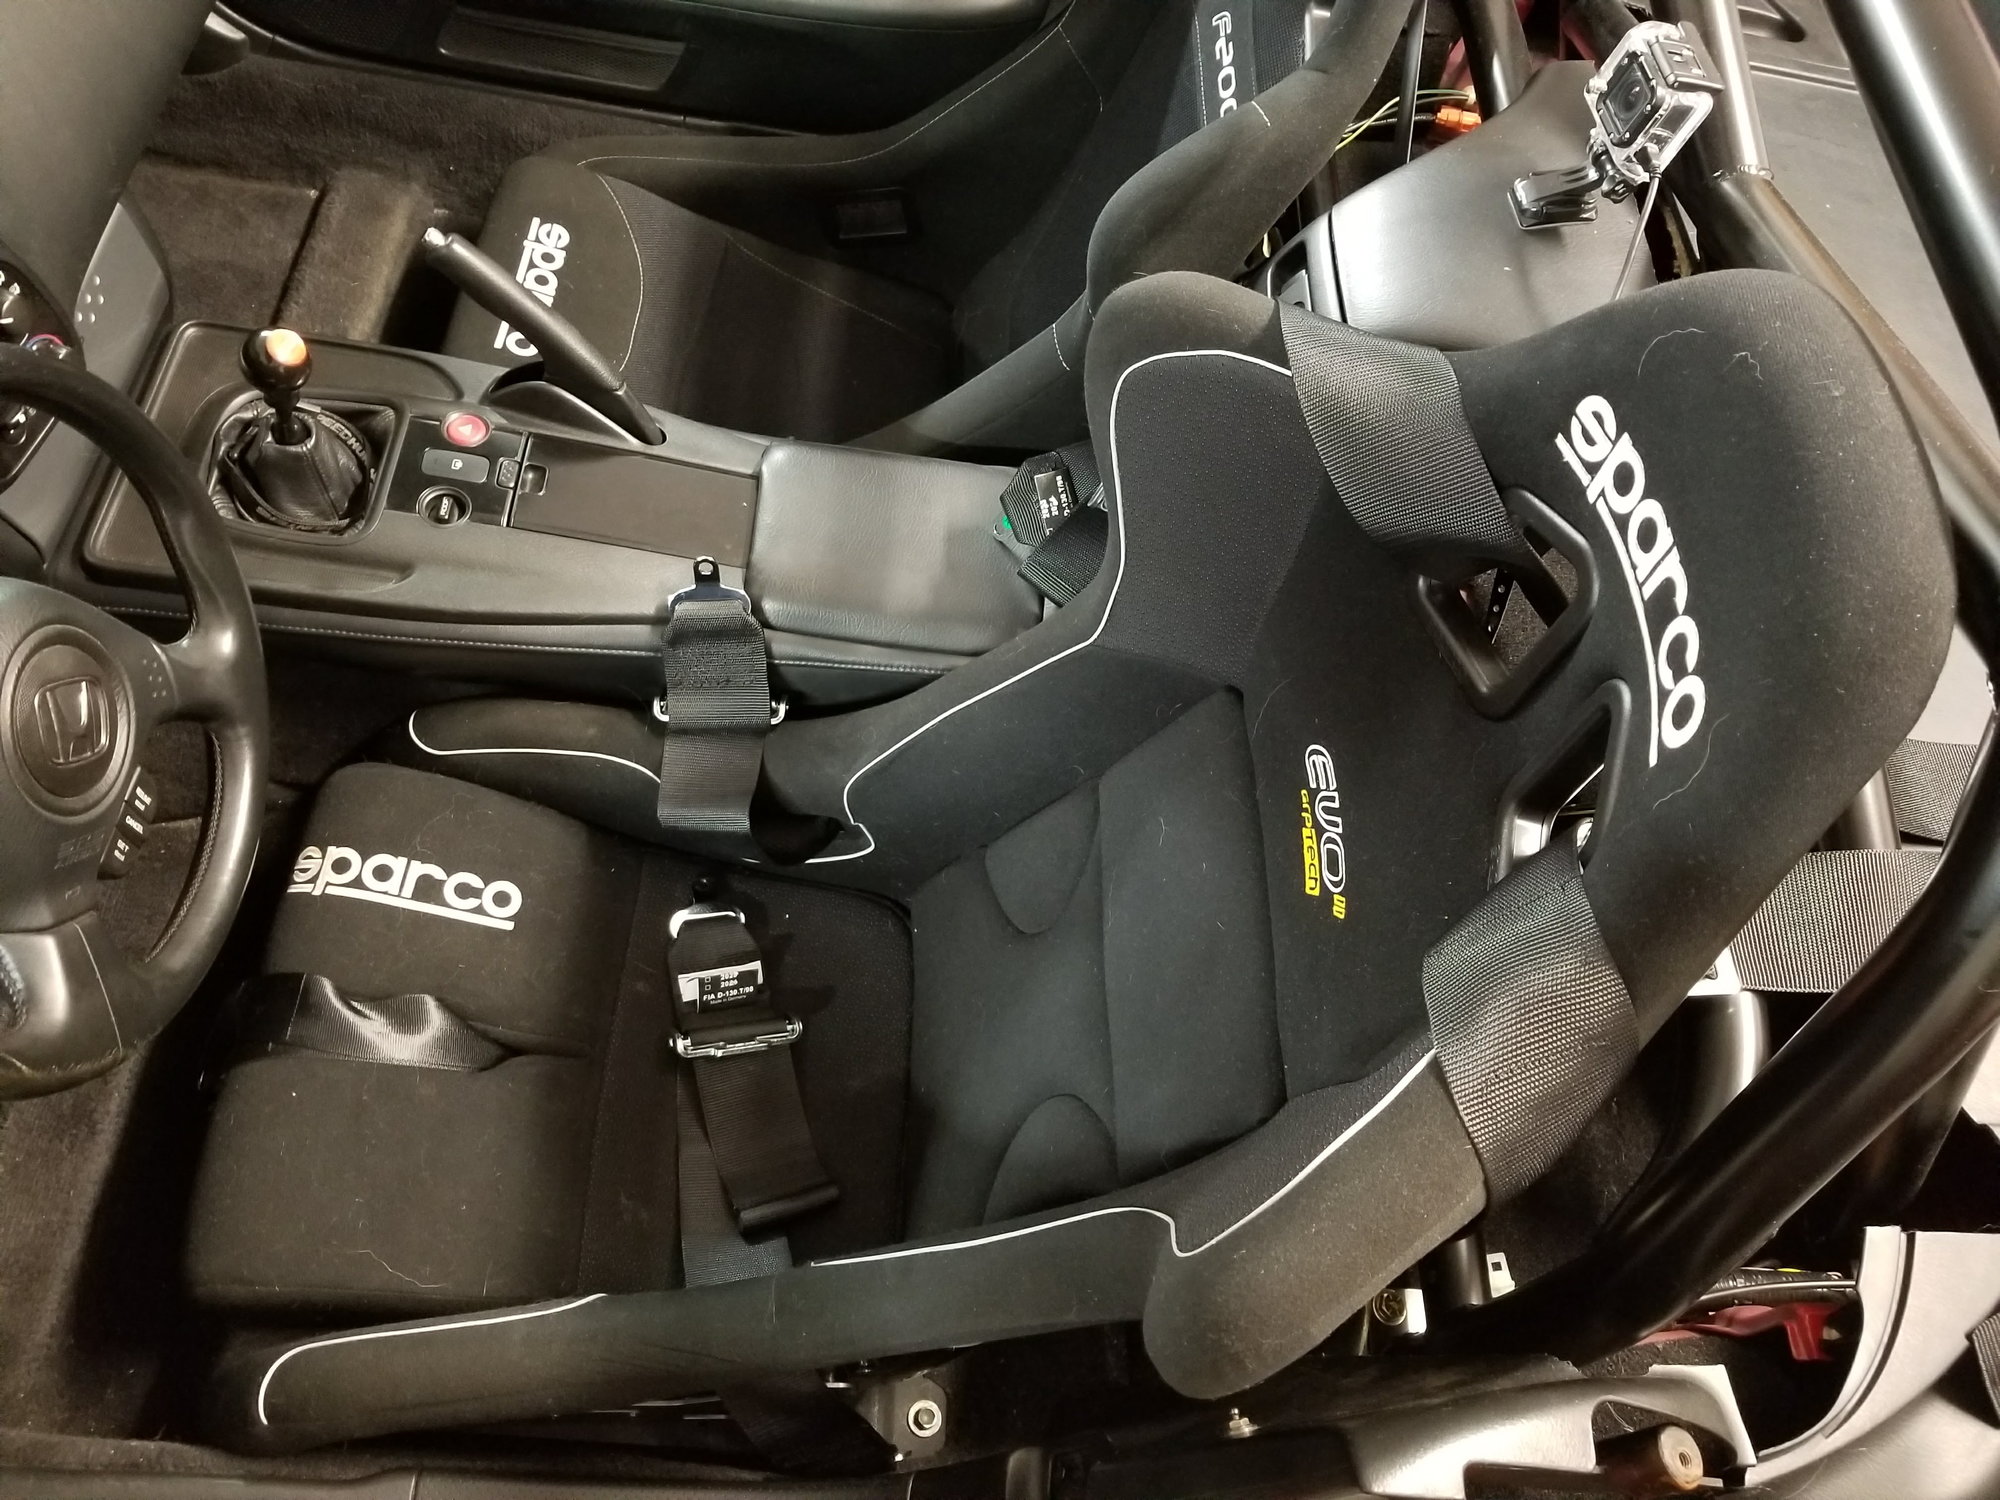 Sparco Evo2 Big Boy Seat installed - S2KI Honda S2000 Forums